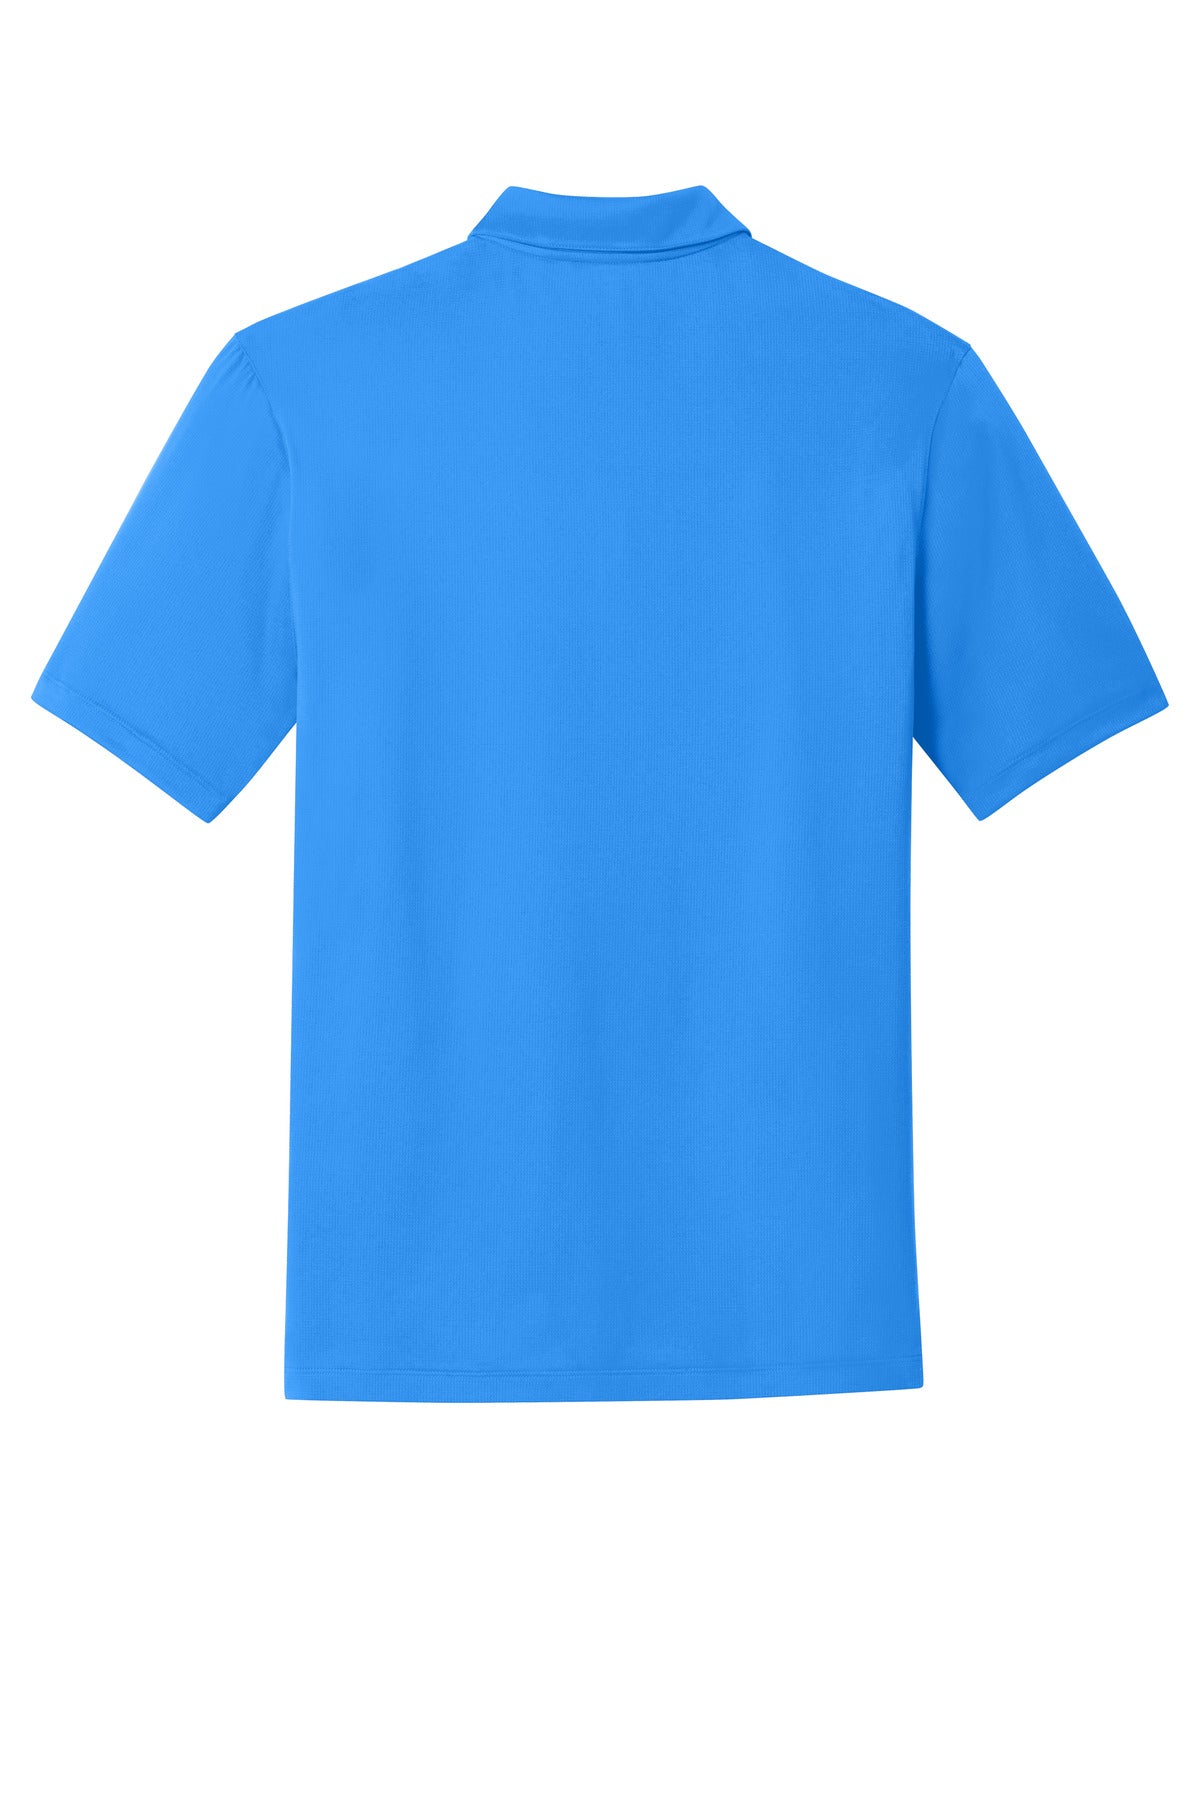 Nike Dri-FIT Legacy Polo. 883681 - BT Imprintables Shirts